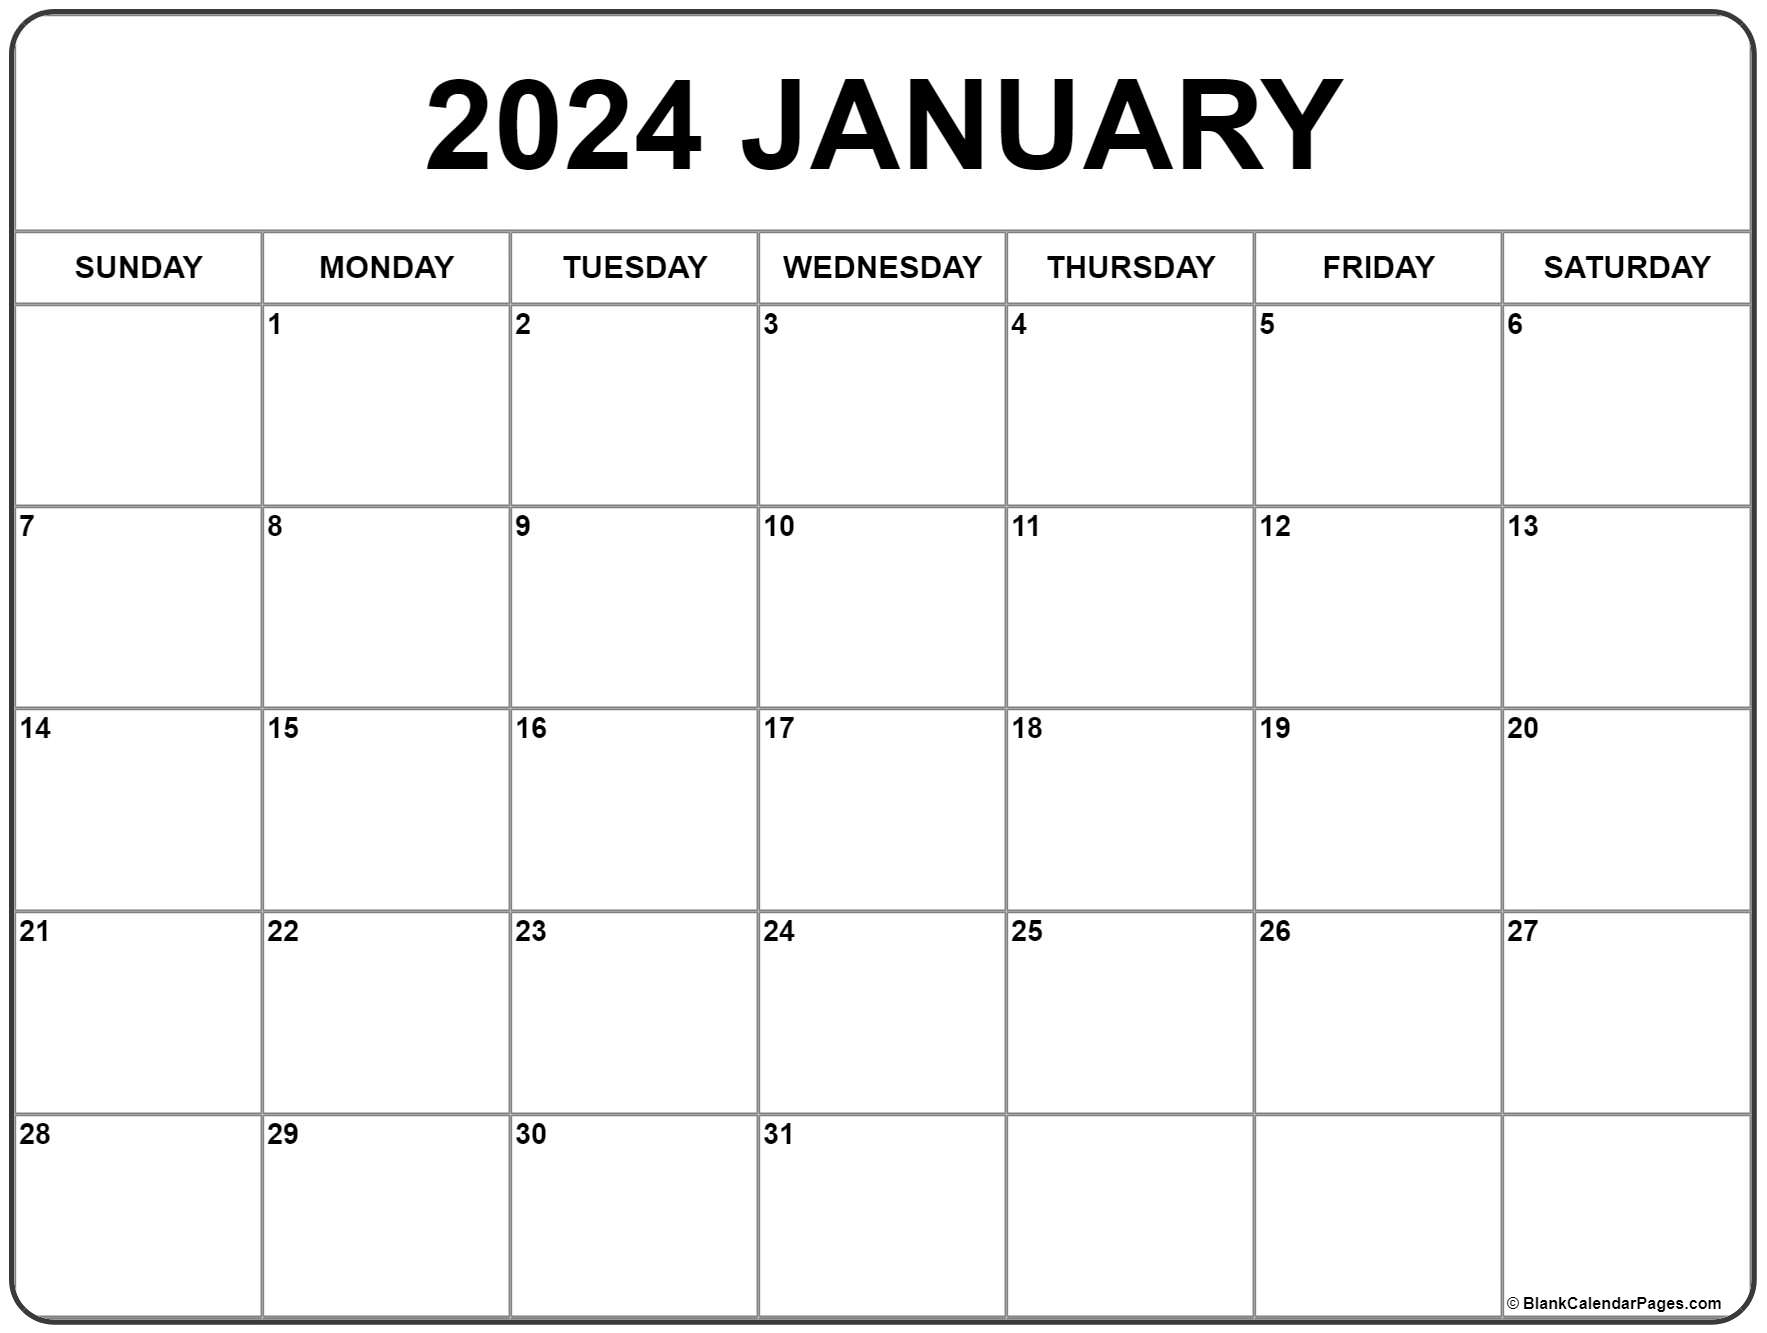 January 2024 Calendar | Free Printable Calendar | Printable Calendar 2024 January Month